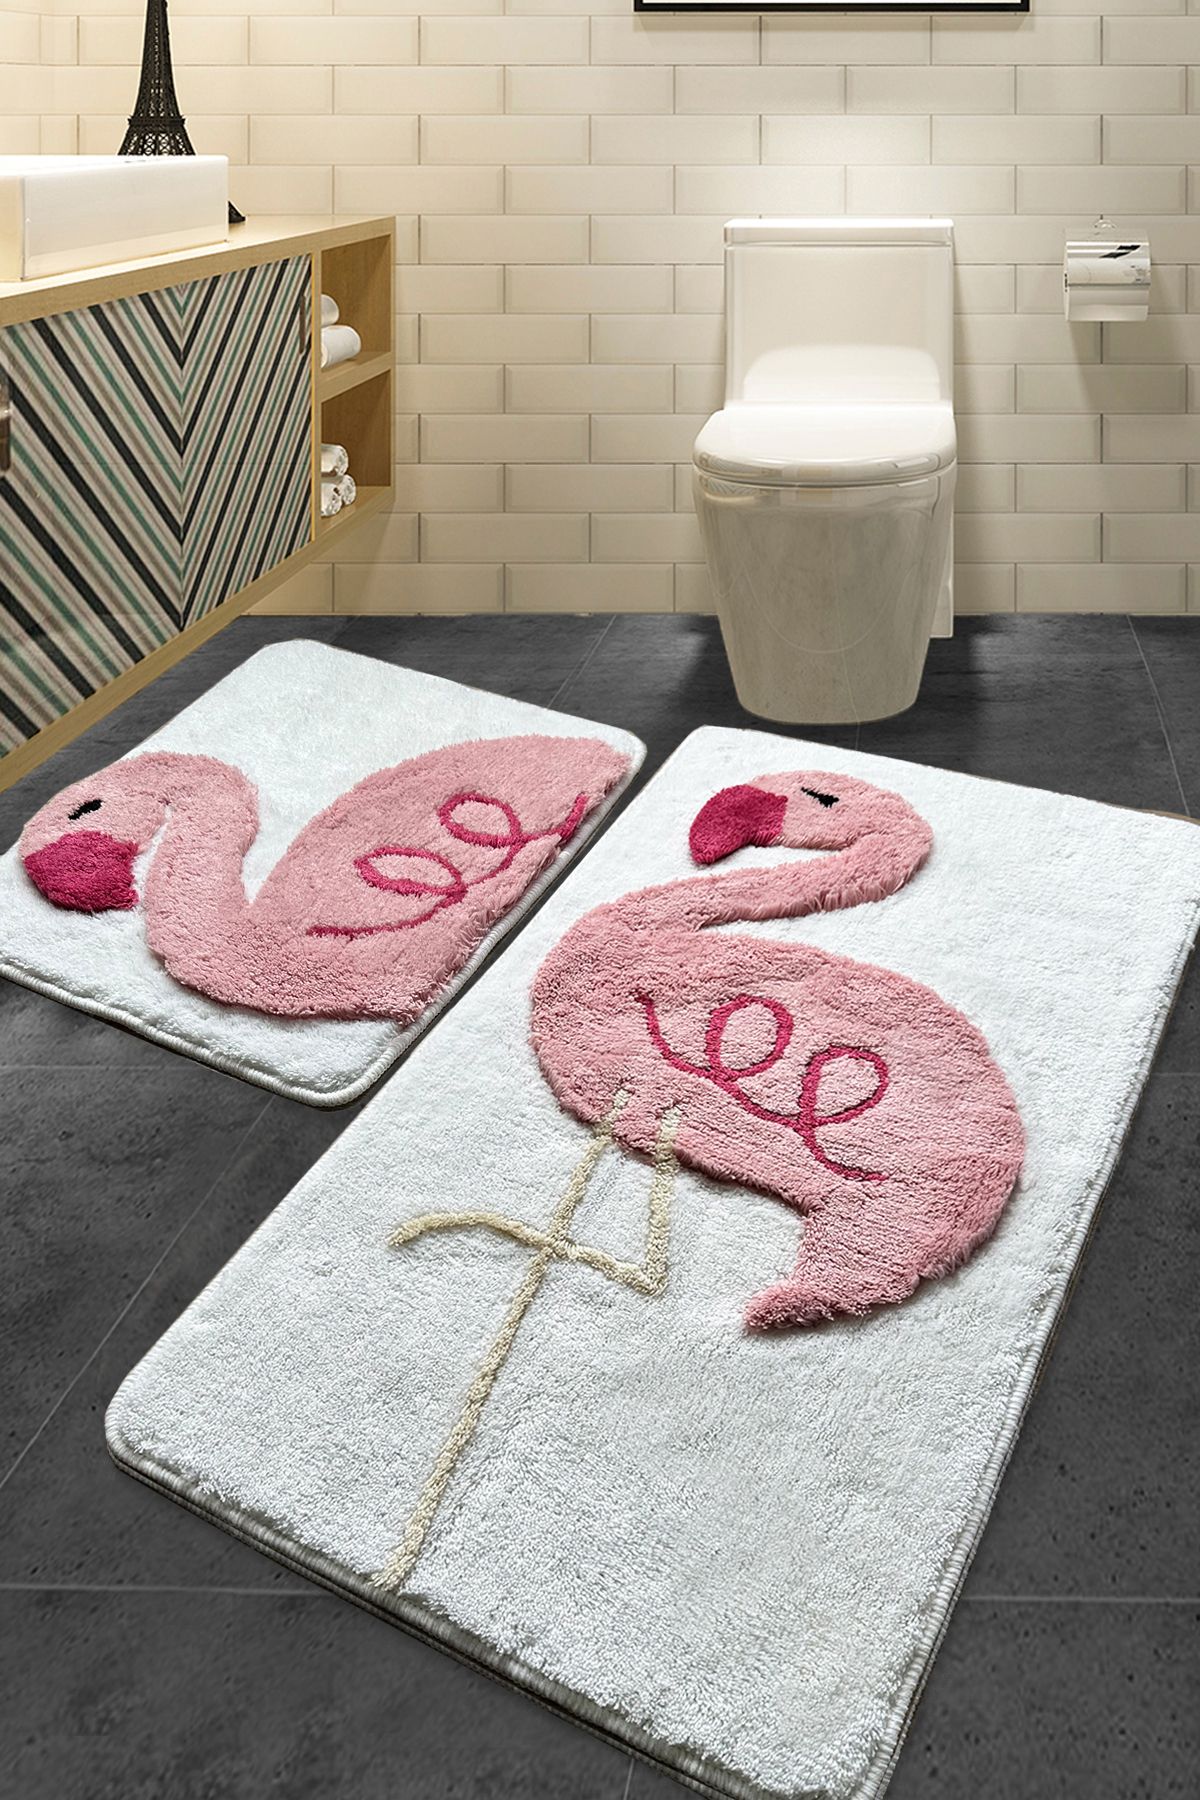 Chilai Home Pınk Flamingo 2li Set Banyo Halısı Yıkanabilir, Kaymaz Taban